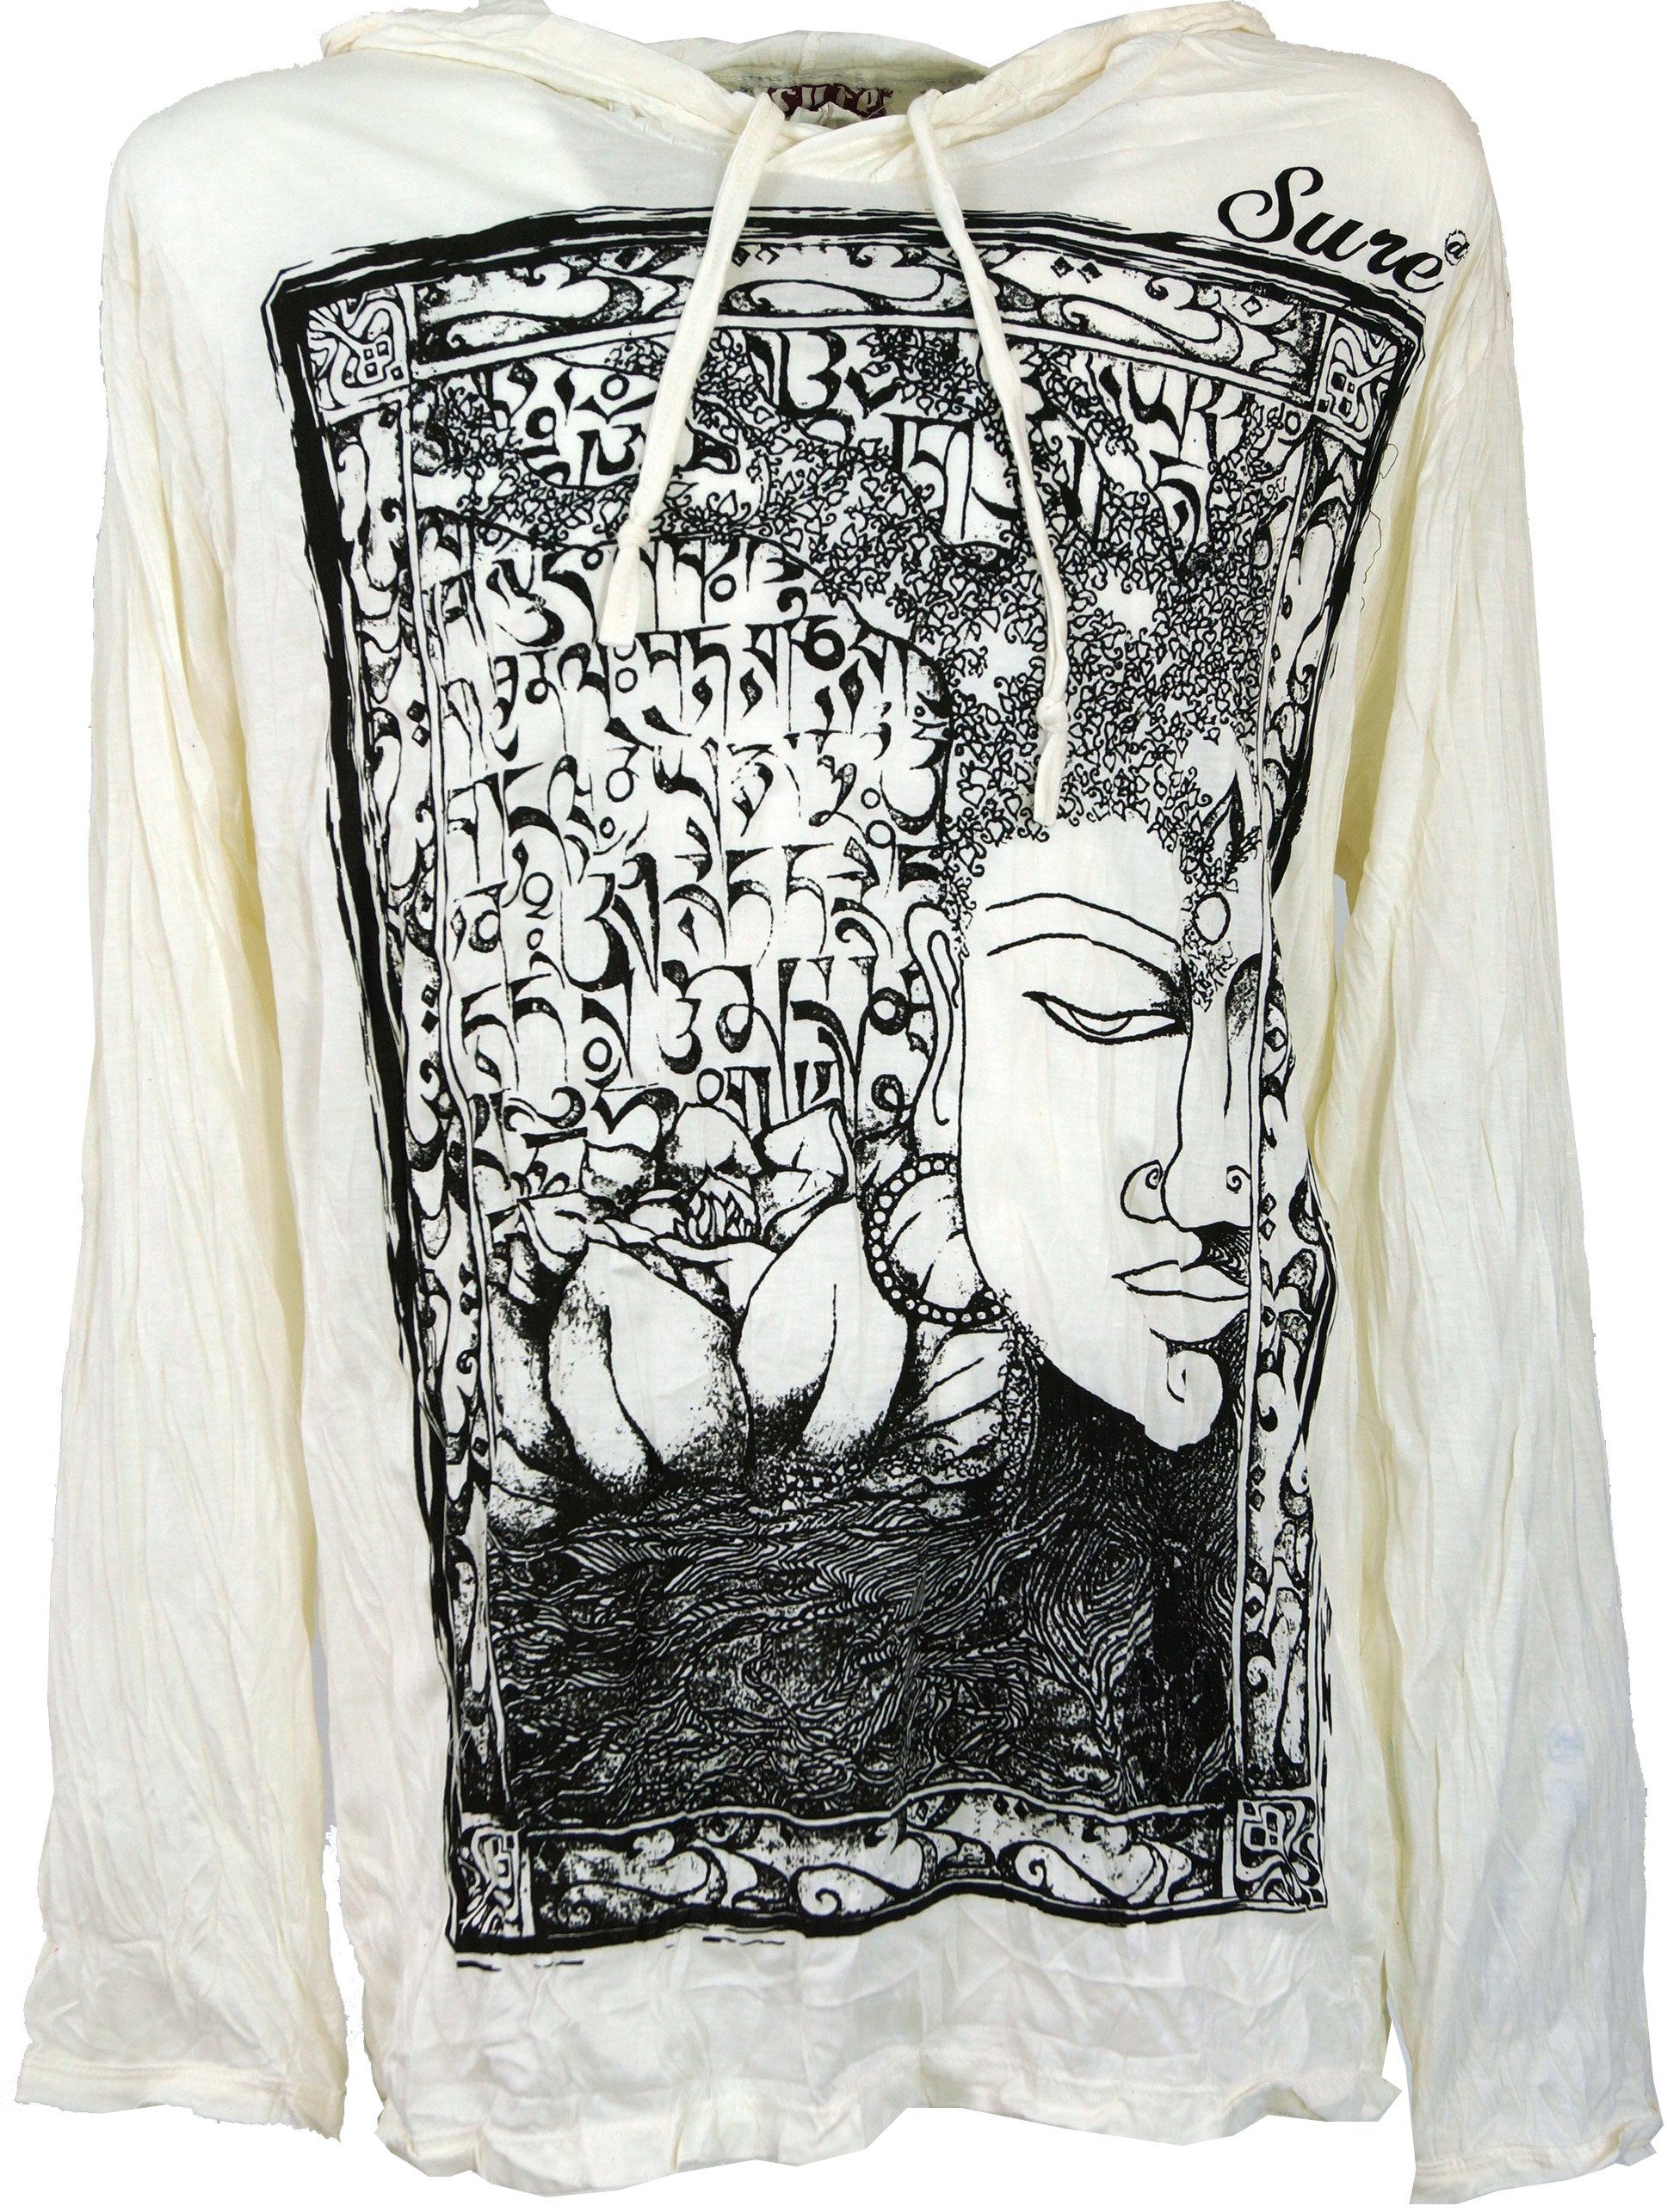 Guru-Shop T-Shirt Sure Langarmshirt, Kapuzenshirt Mantra Buddha -.. Goa Style, Festival, alternative Bekleidung weiß